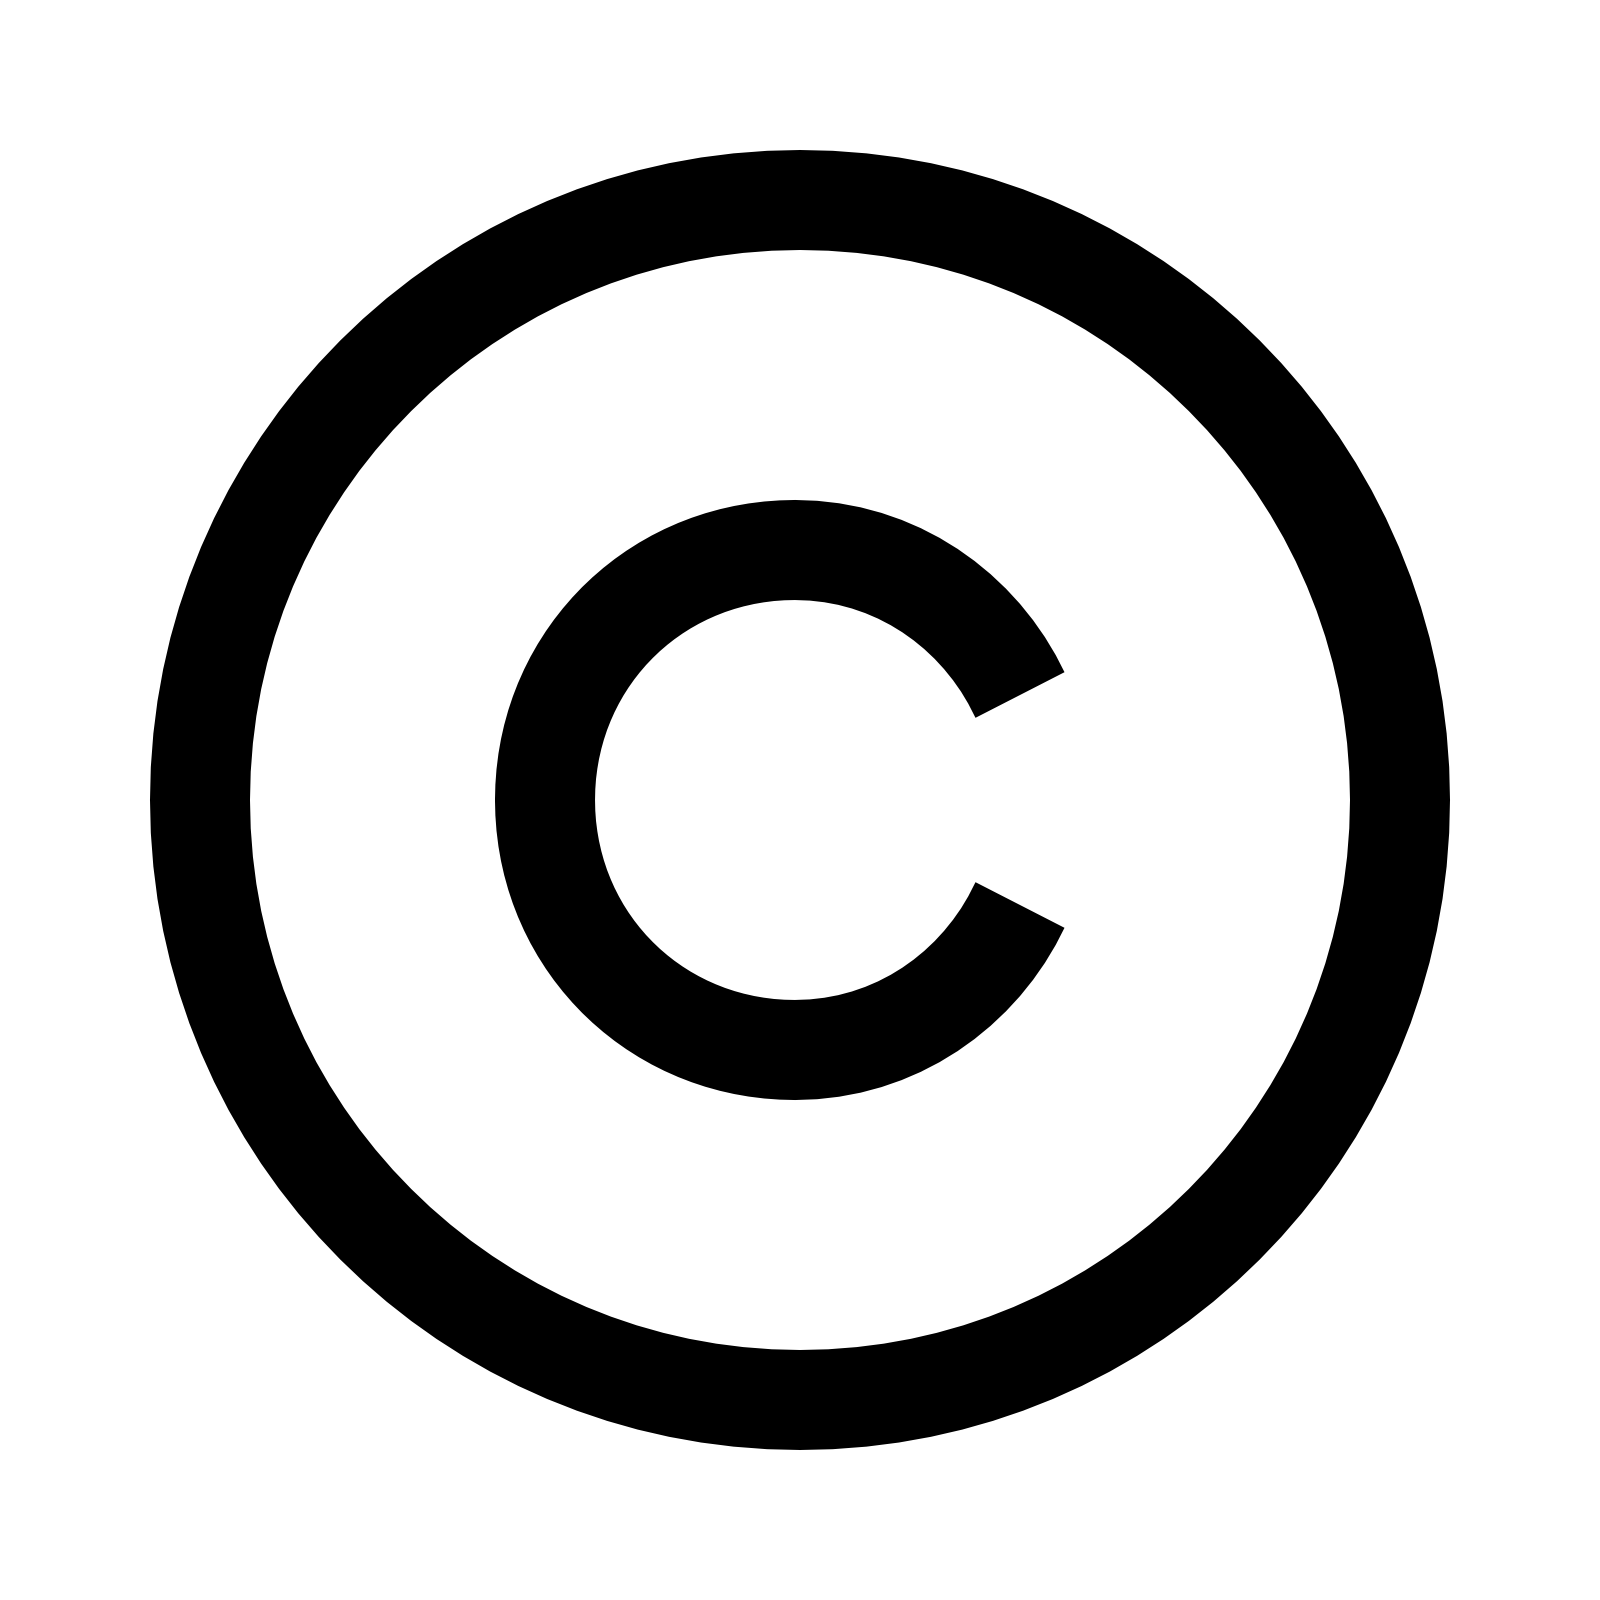 copyright free icons